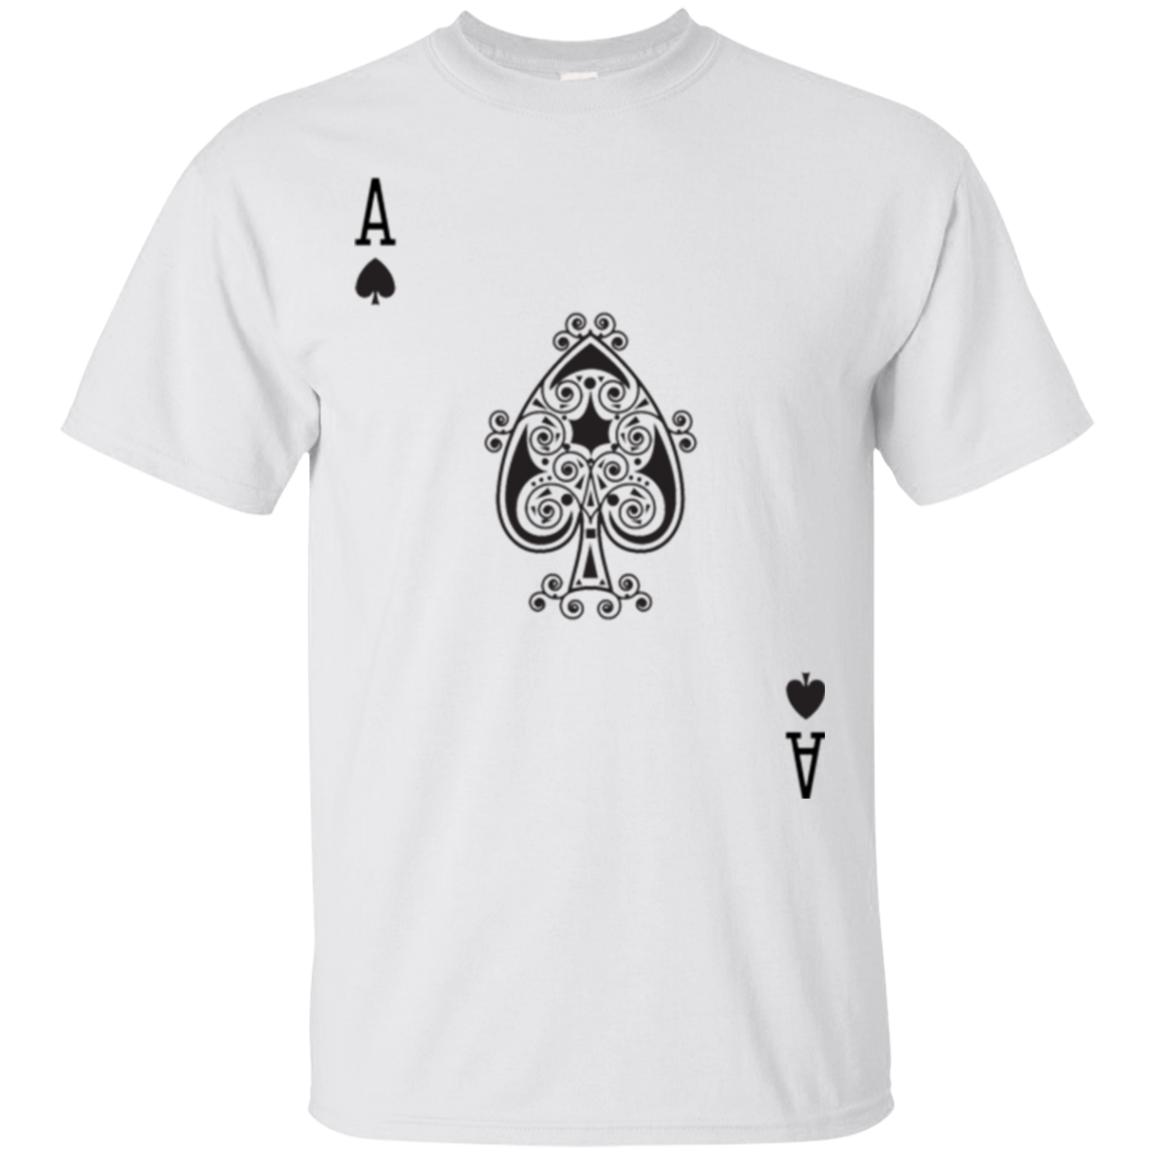 Ace of Spades Costume Shirt Playing Card Poker T-Shirt